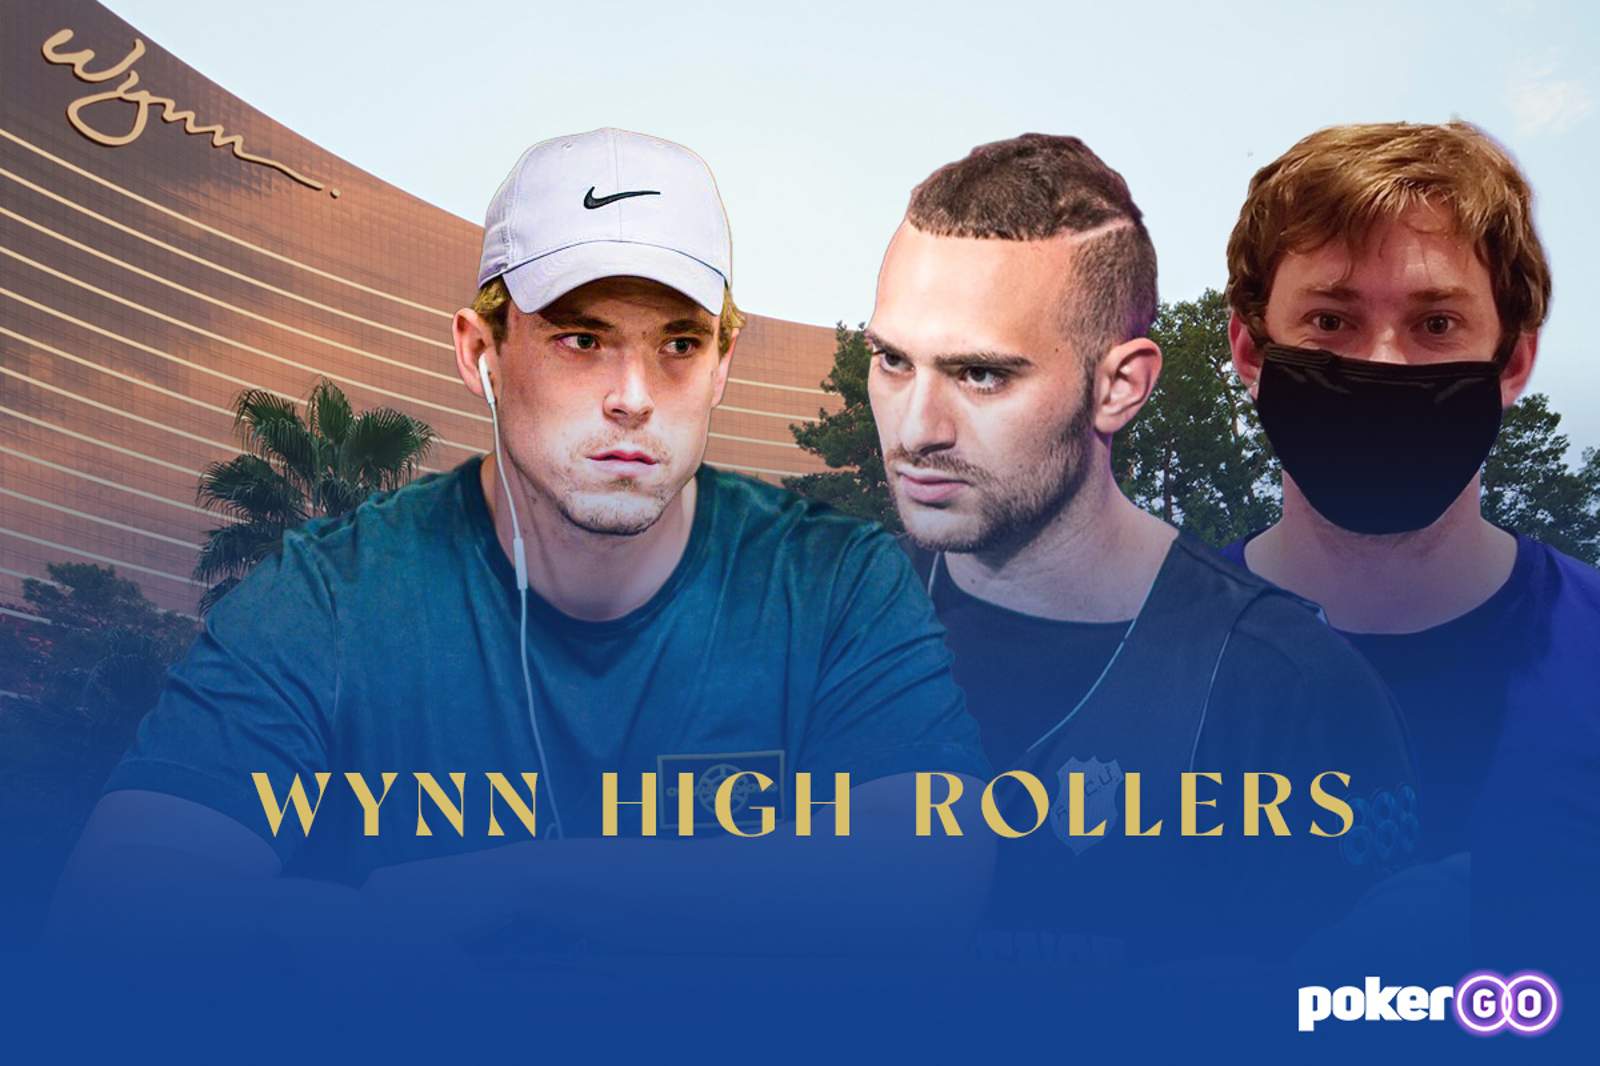 Wynn High Rollers Won by Aram Zobian, Christopher Brewer, and Alex Foxen